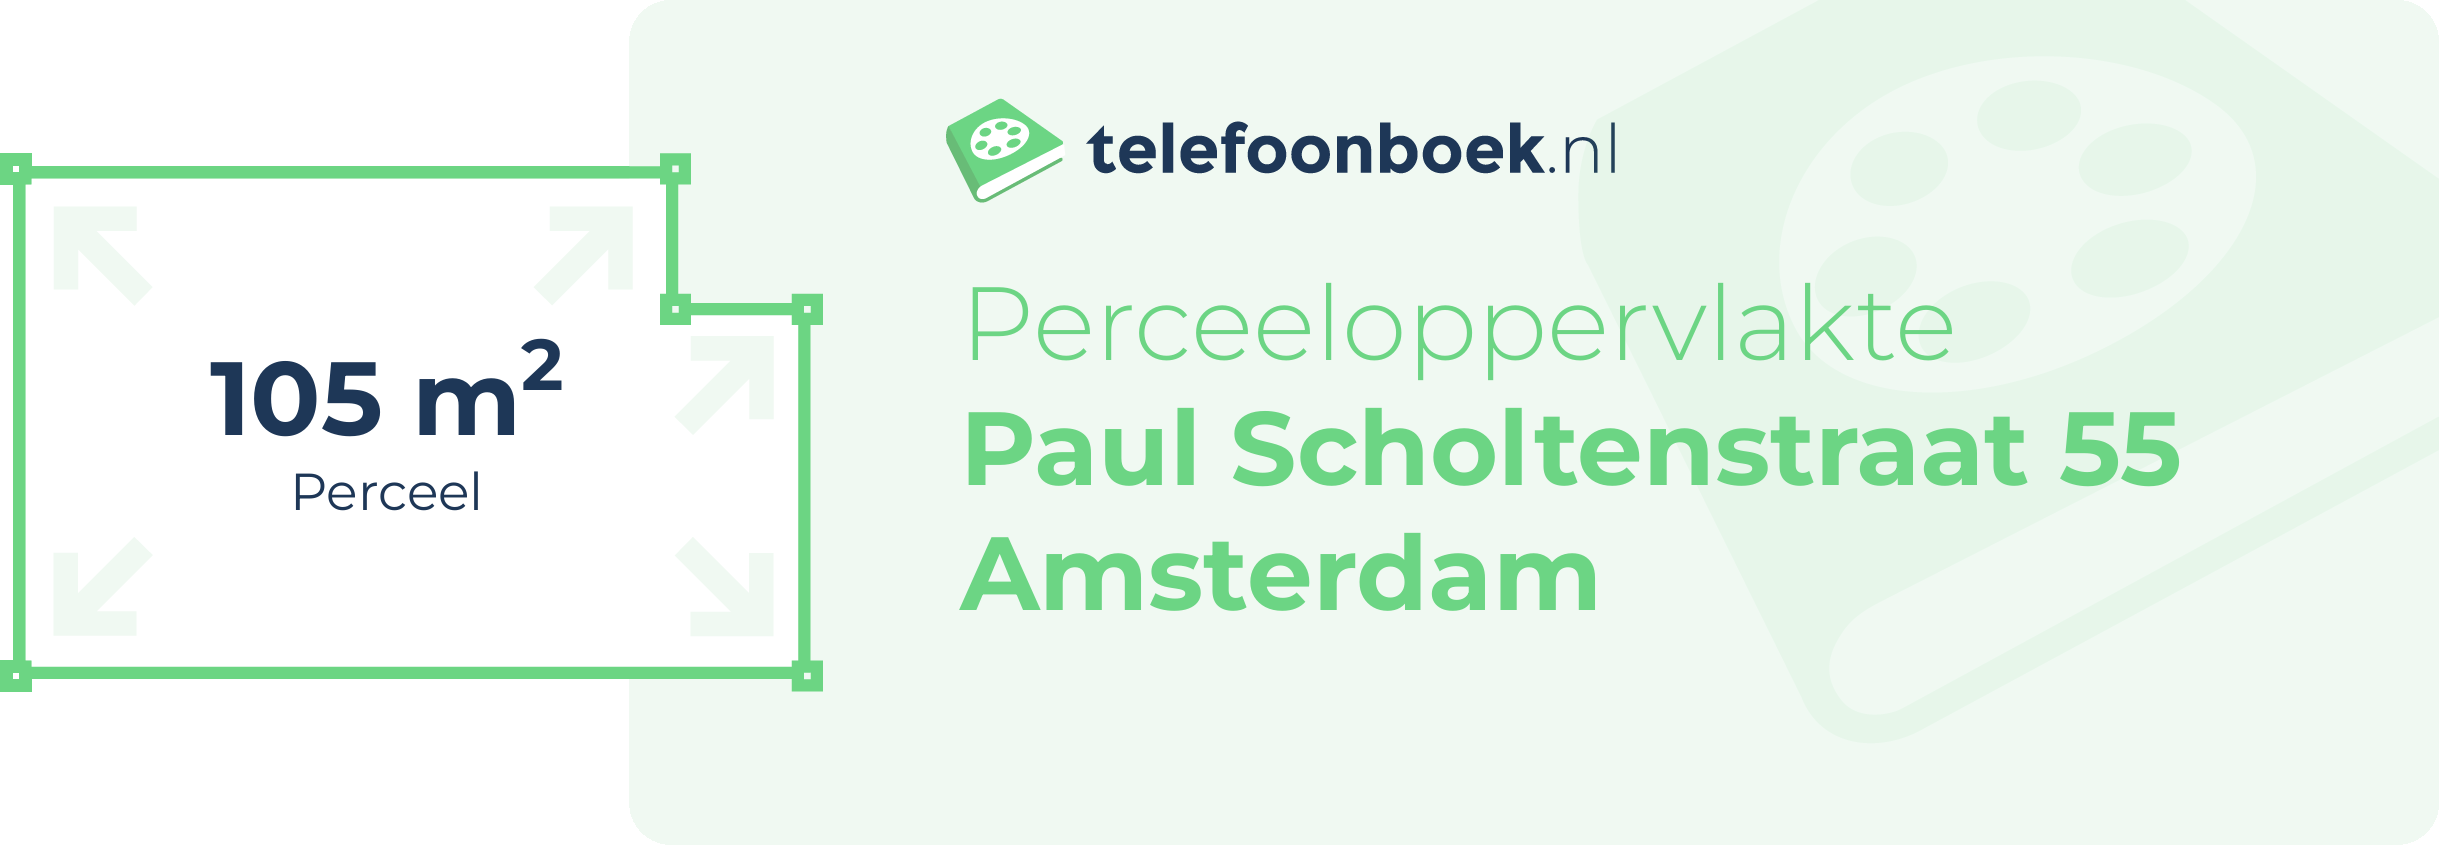 Perceeloppervlakte Paul Scholtenstraat 55 Amsterdam